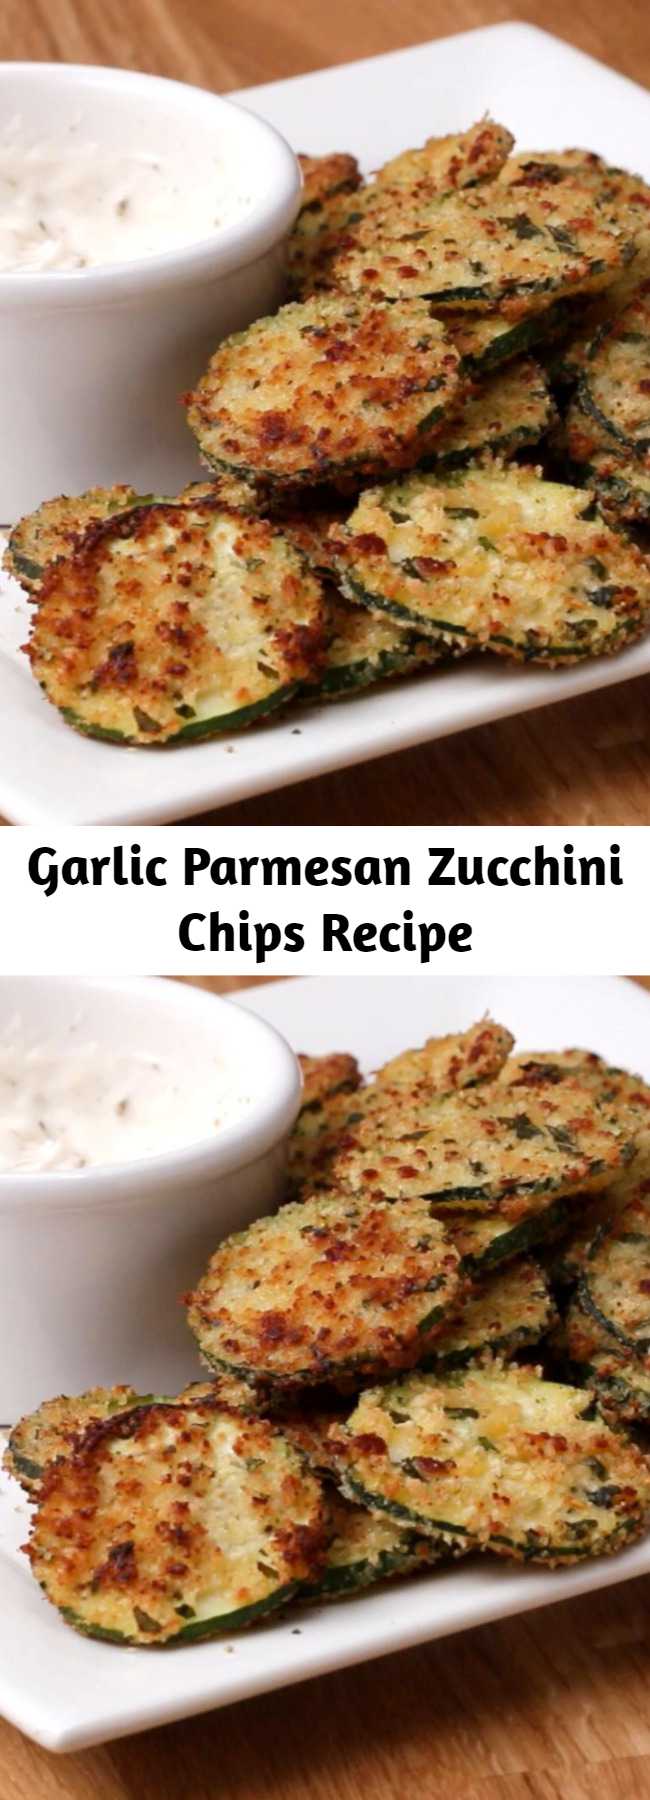 Garlic Parmesan Zucchini Chips Recipe